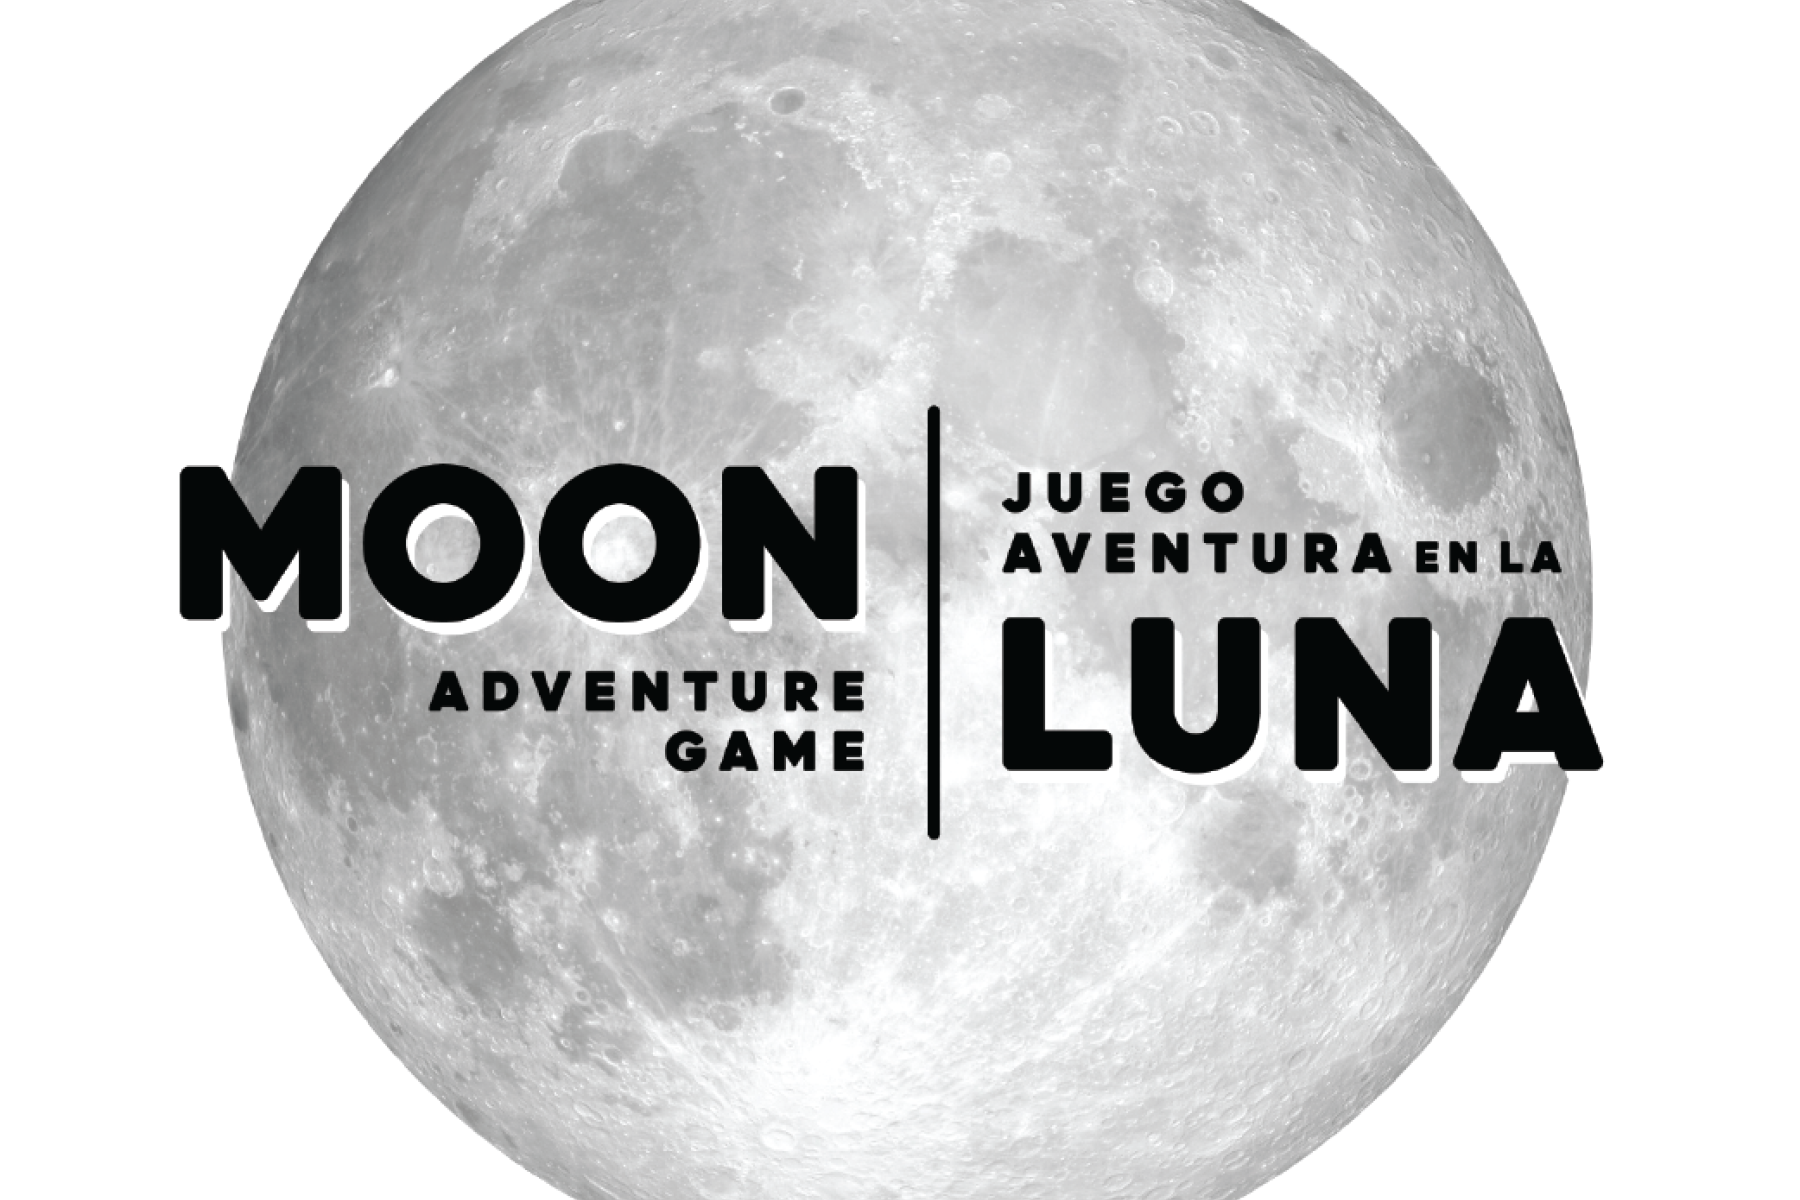 Moon Adventure Game logo square